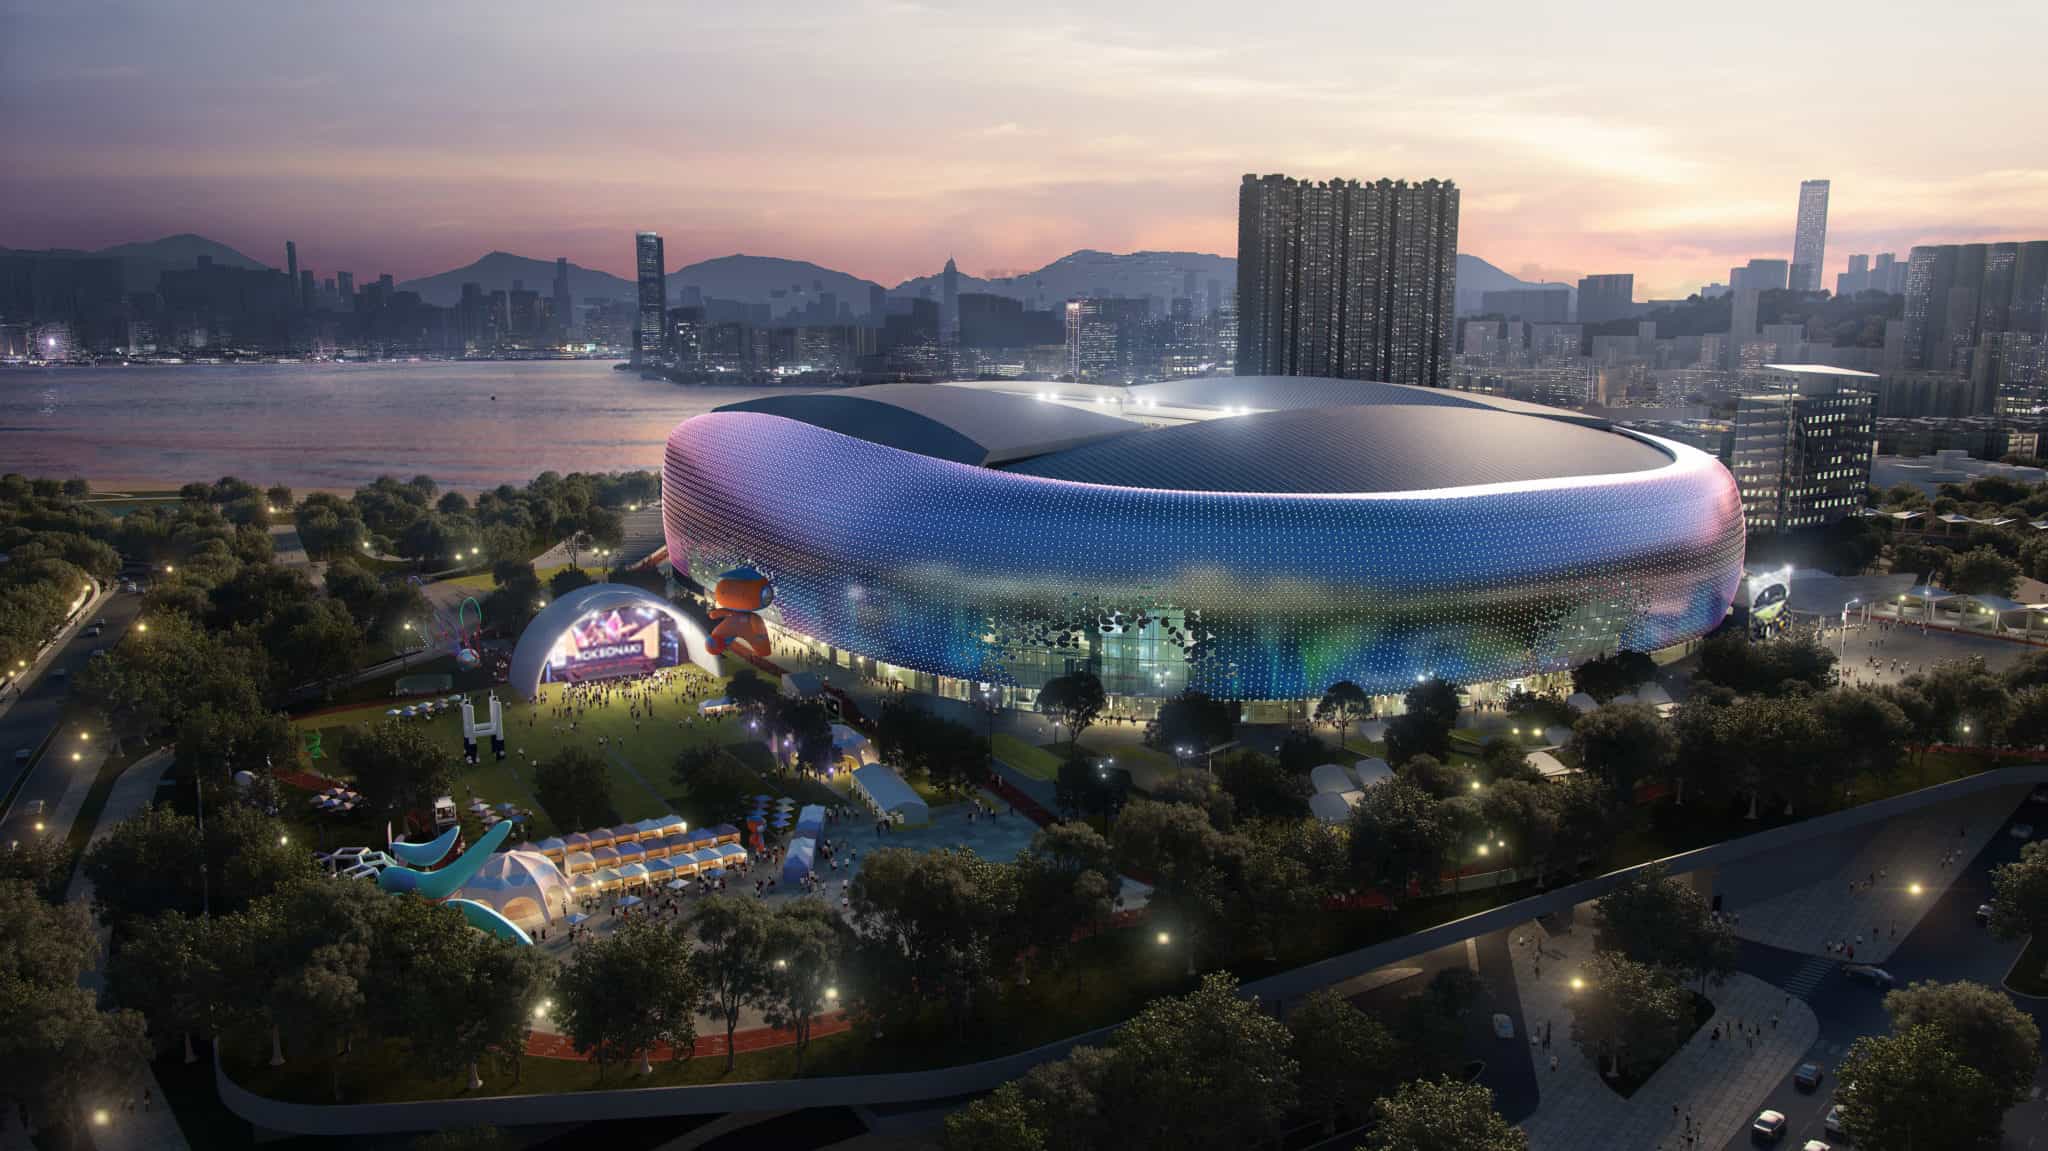 An architectural visualisation of Kai Tak Sports Park in Hong Kong at dusk